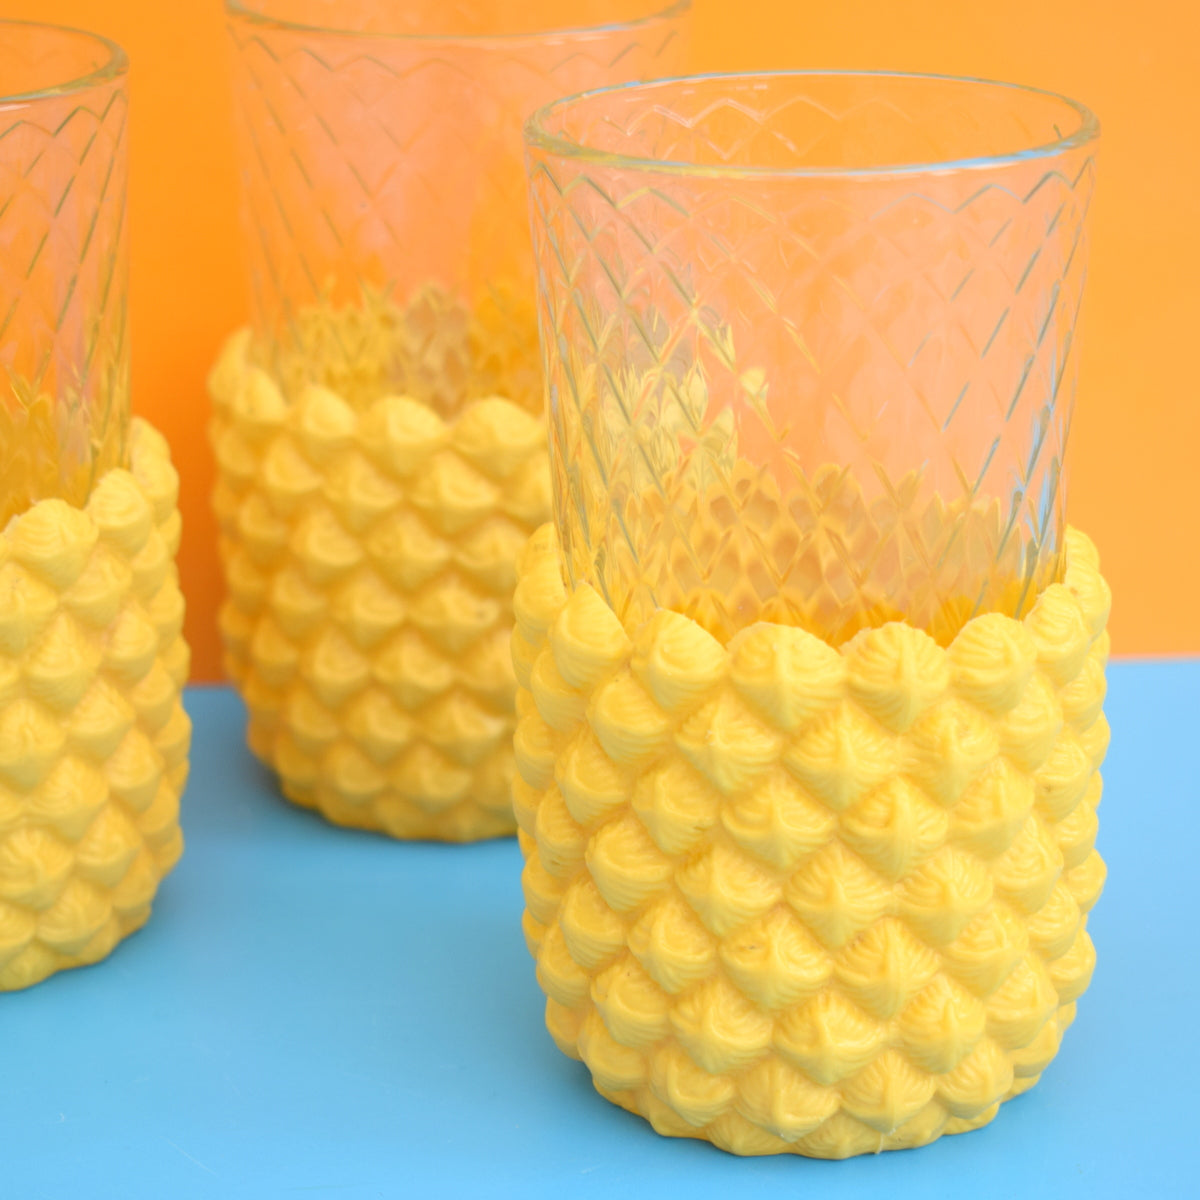 Vintage 1970s Pineapple Ice Bucket Glasses - Plastic - Yellow